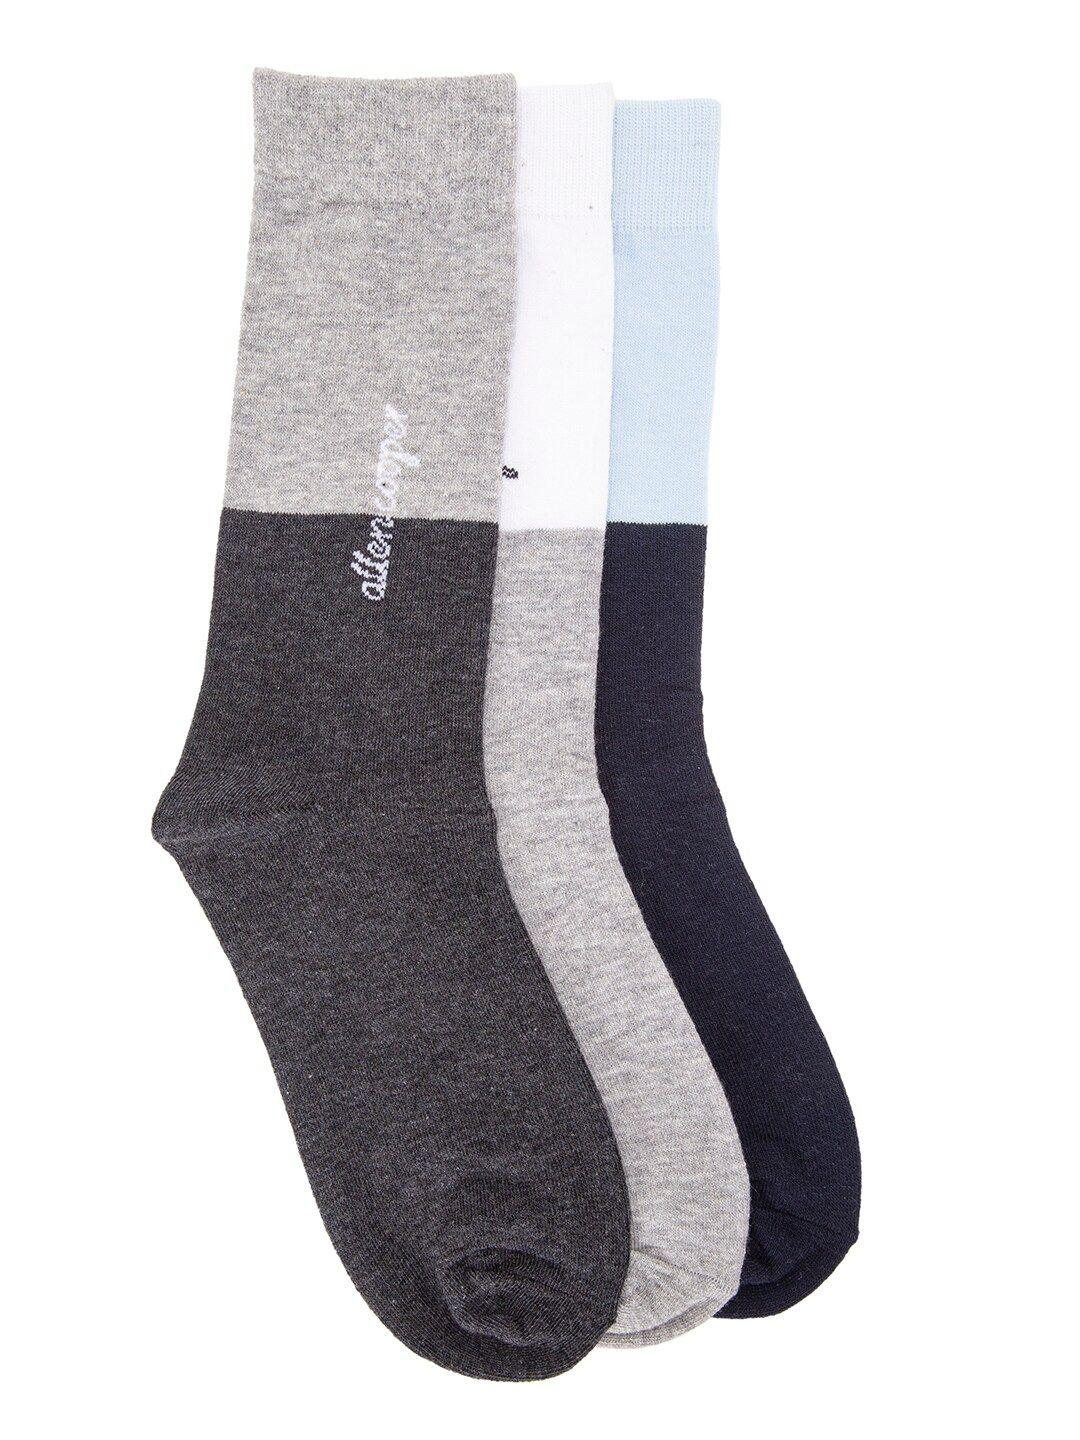 allen-cooper-men-pack-of-3-assorted-cotton-calf-length-socks